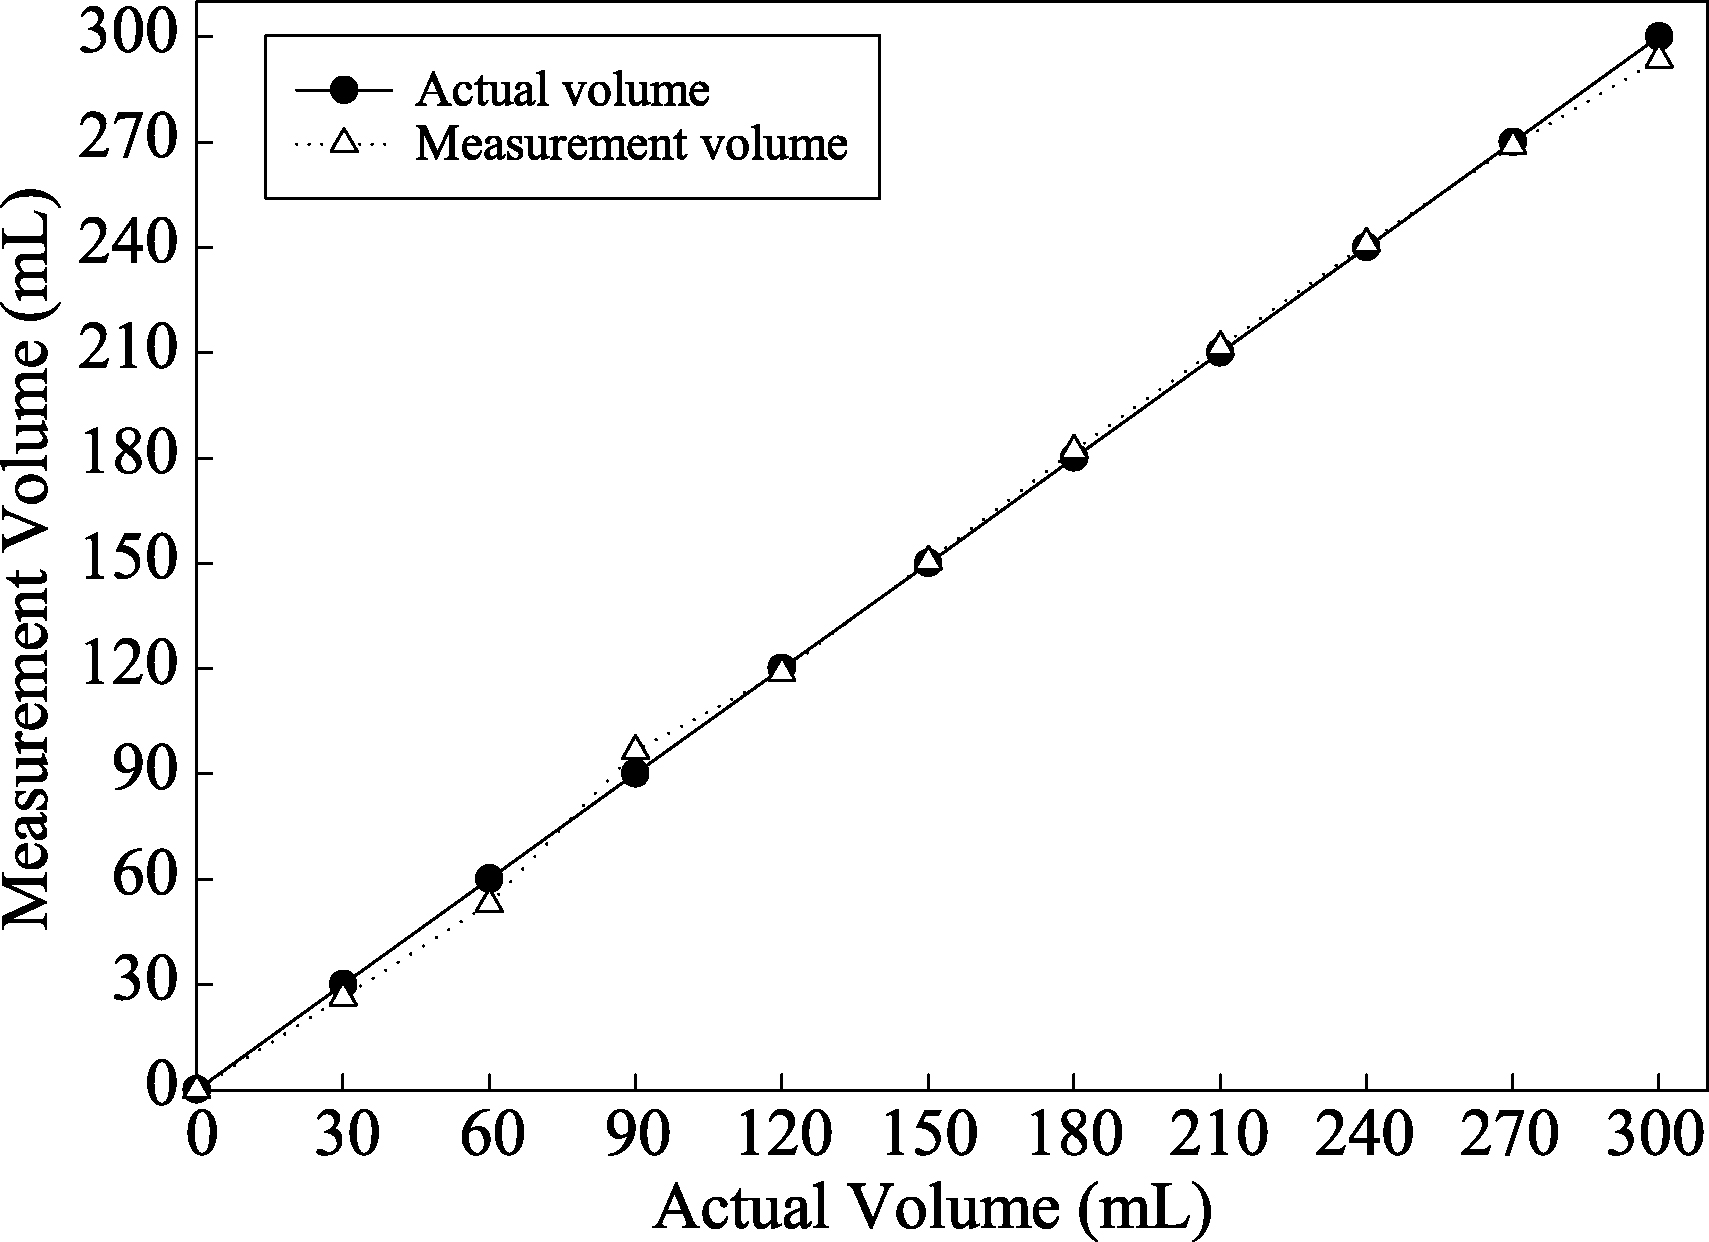 The graph of measured water volume versus actual water volume.